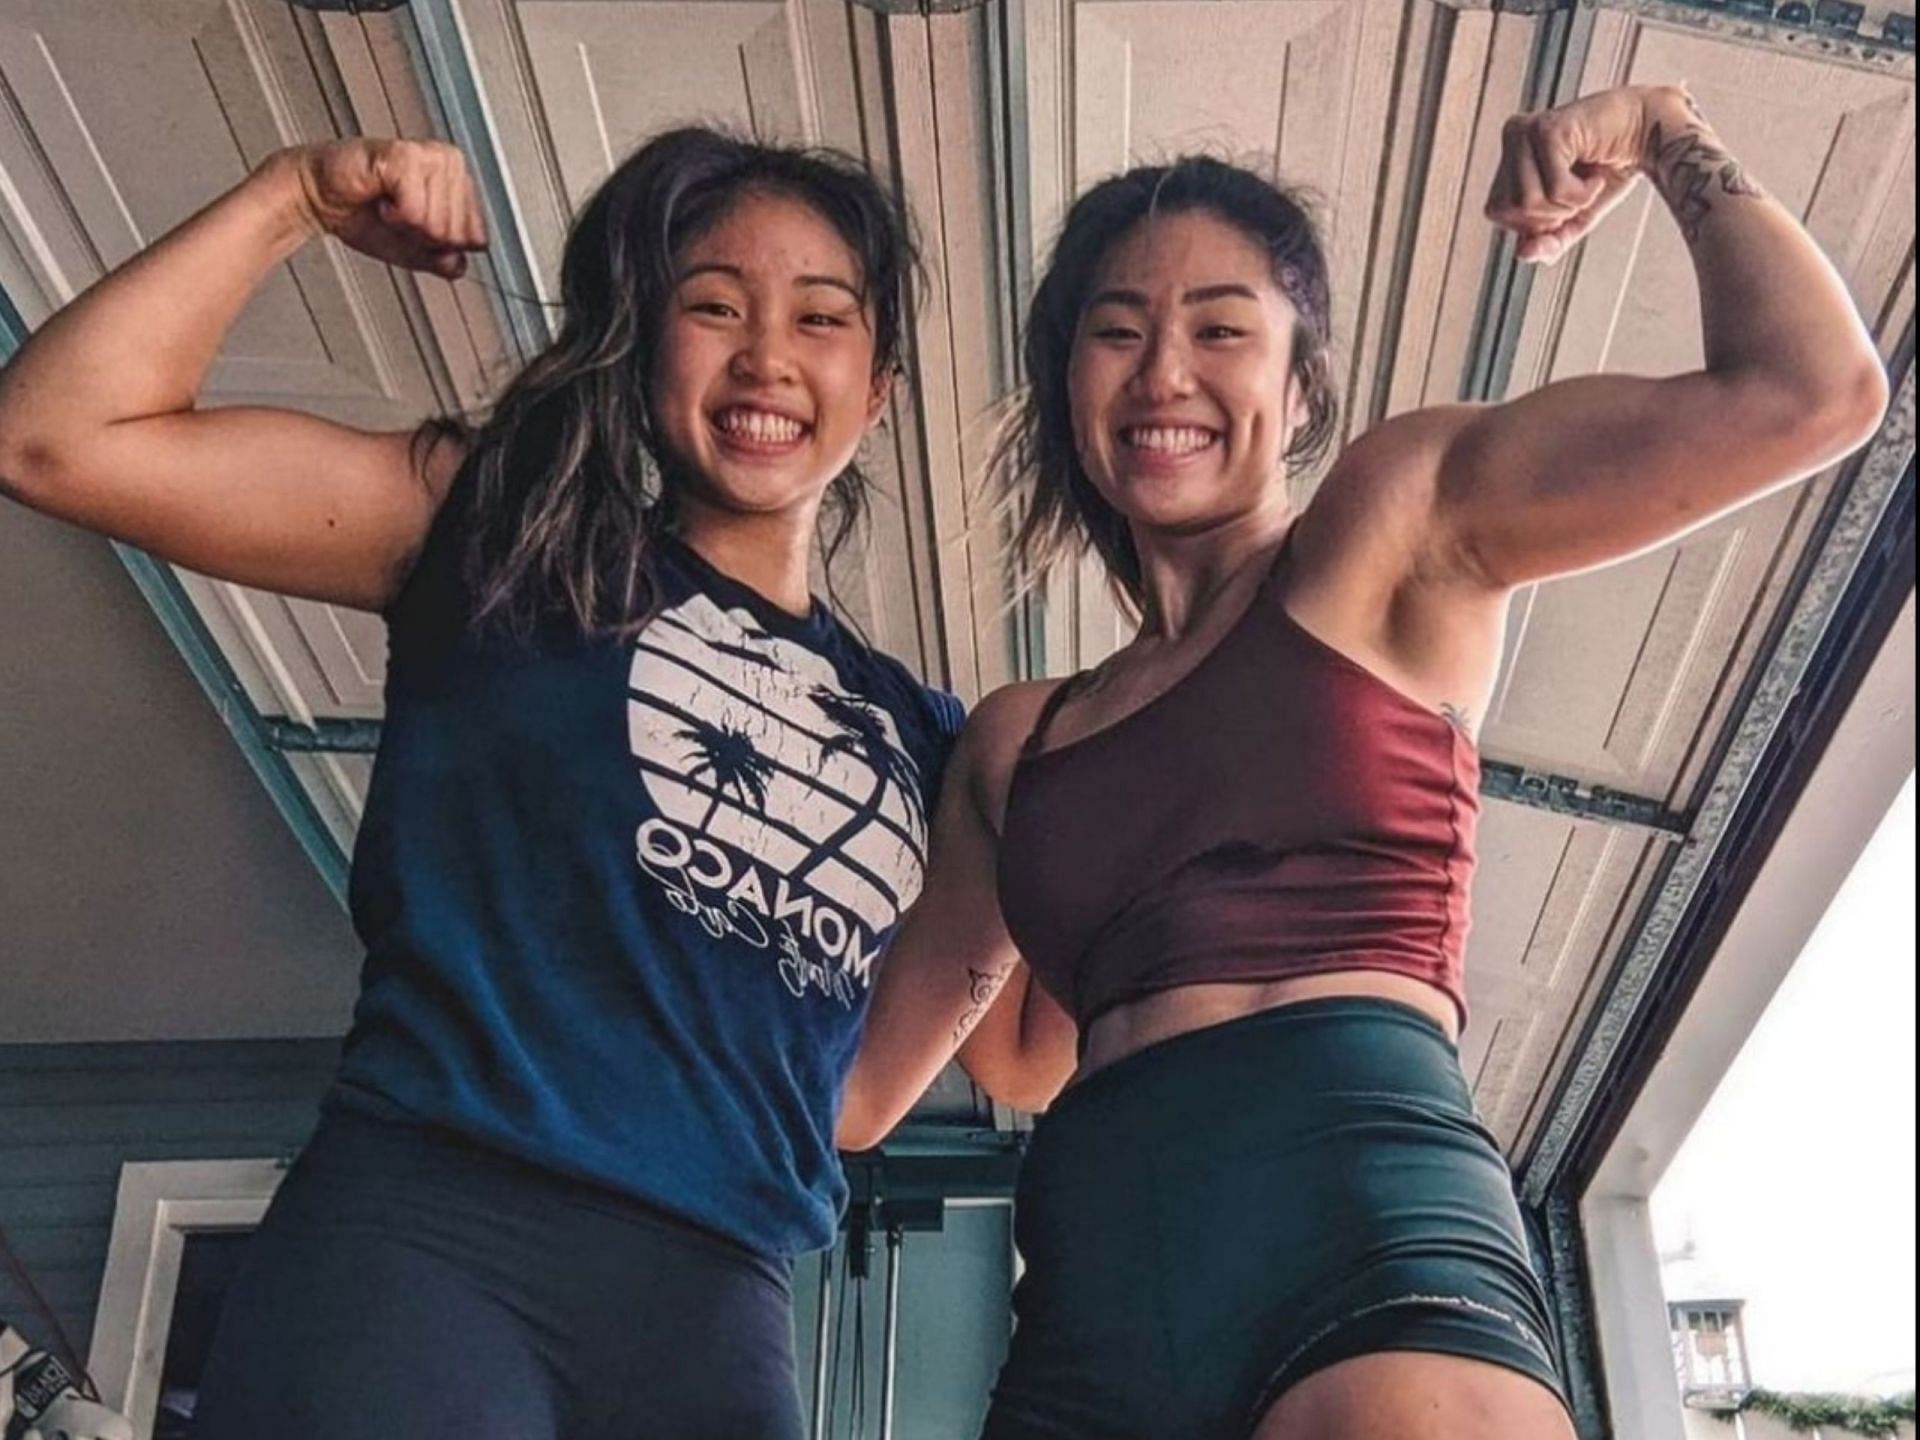 Victoria Lee (left) and Angela Lee (right). [Photo: Instagram/@angelaleemma]